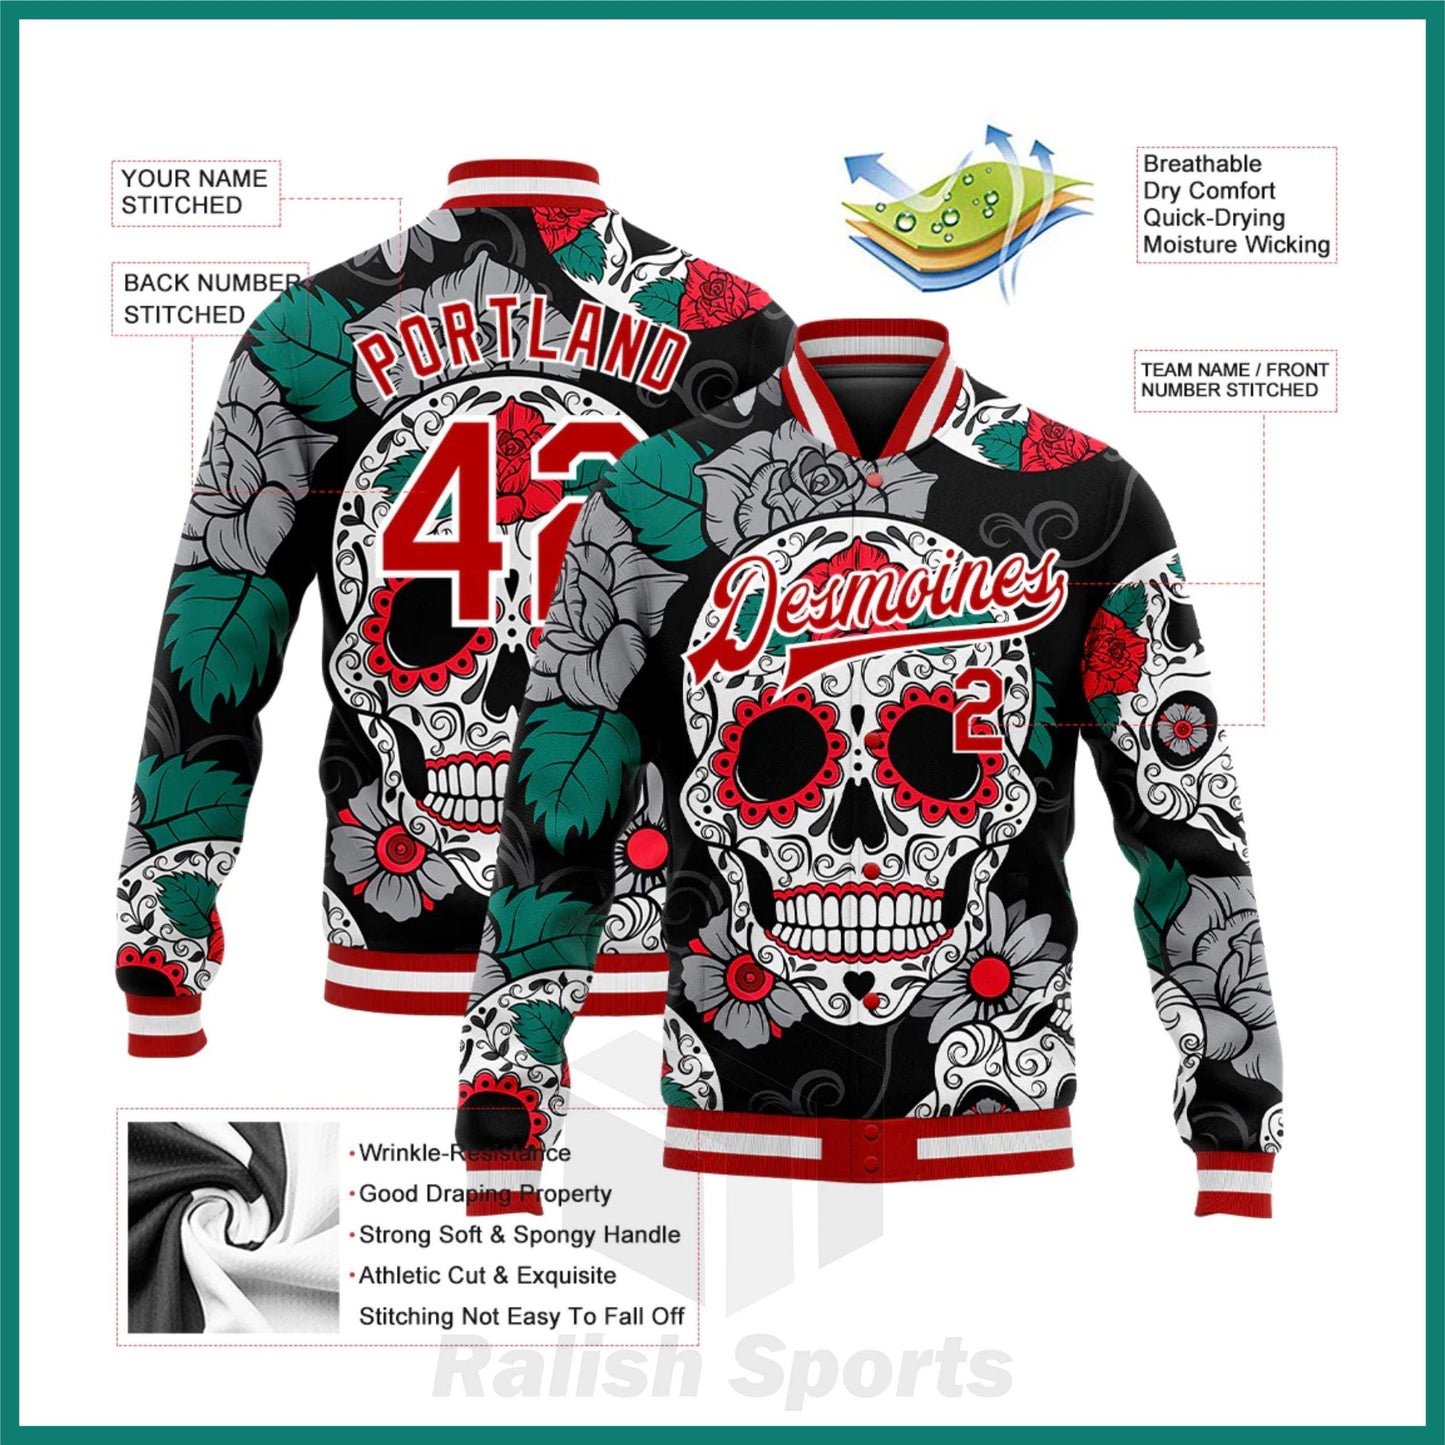 Custom Black Red-White Skull Fashion 3D Bomber Full-Snap Varsity Letterman Jacket - Ralish Sports